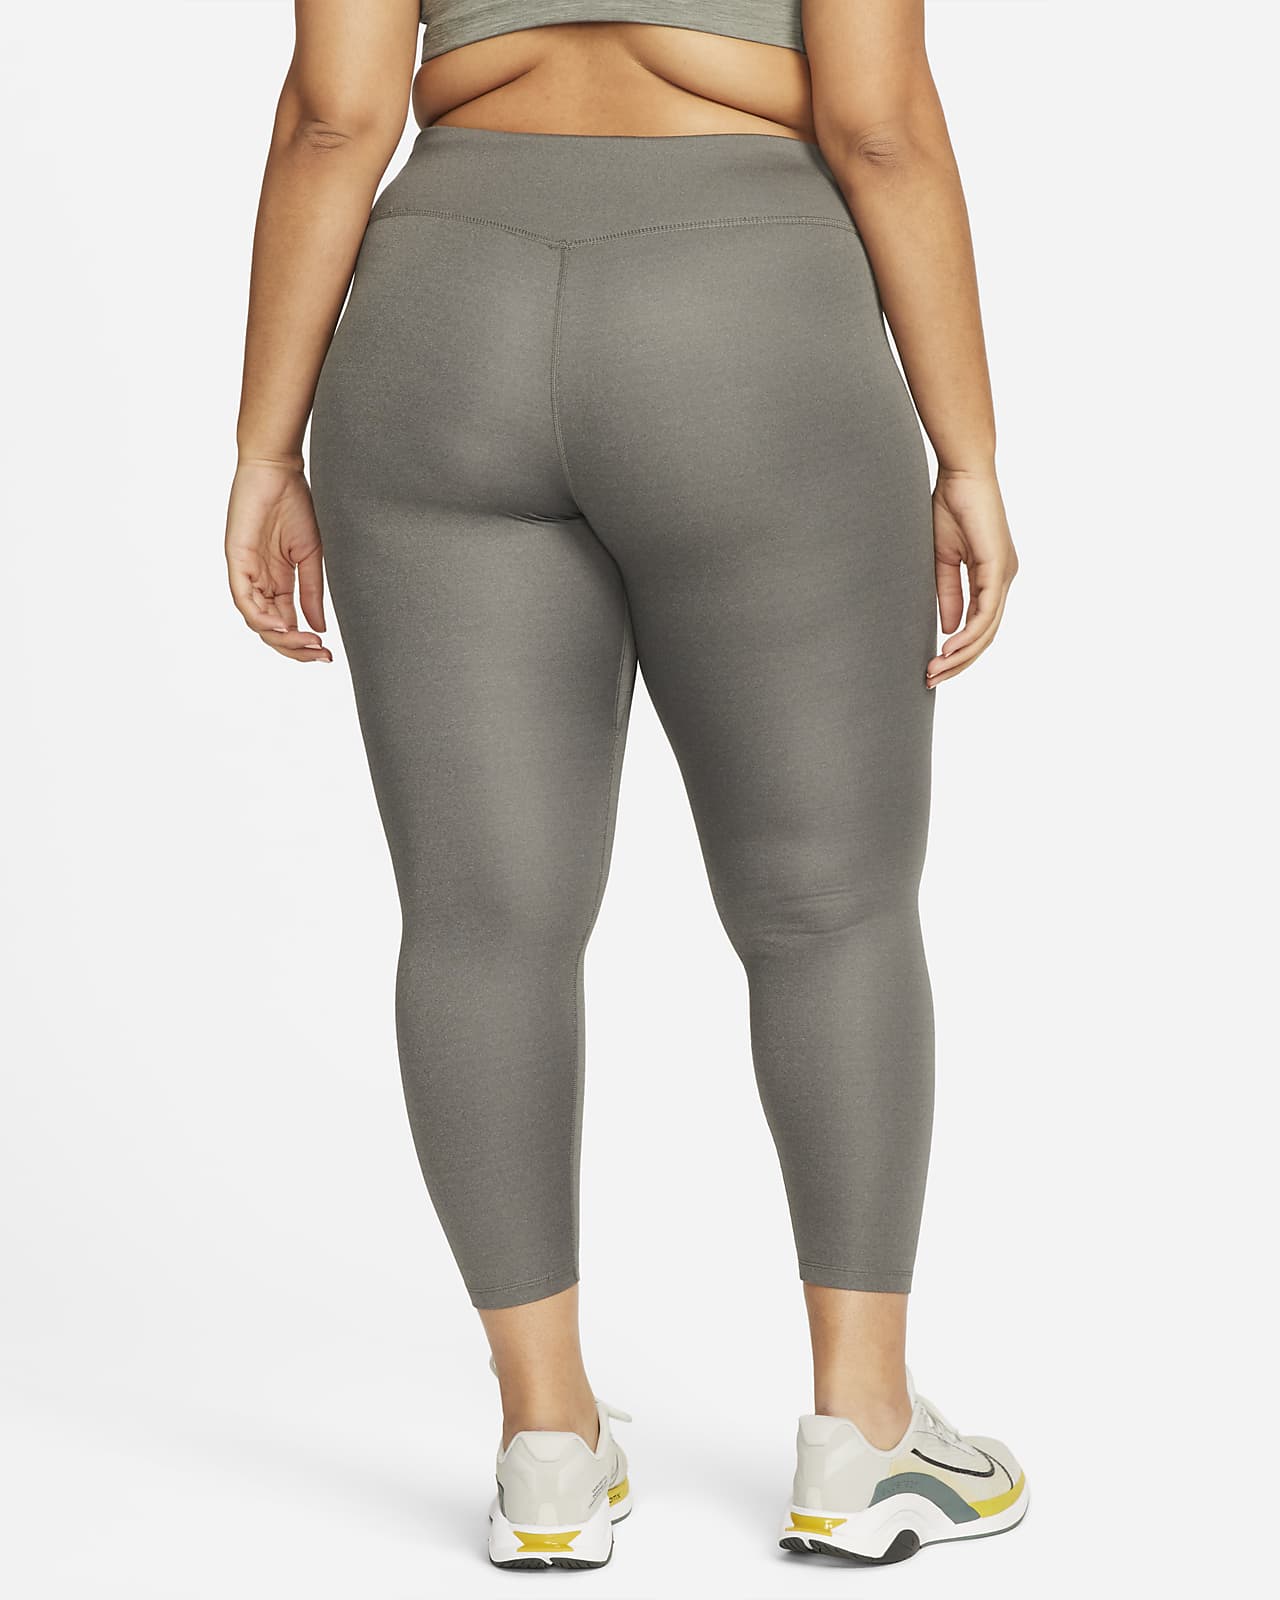 Nike Plus Size 1X 3X $90 One Luxe Women's Mid-Rise 7/8 Leggings